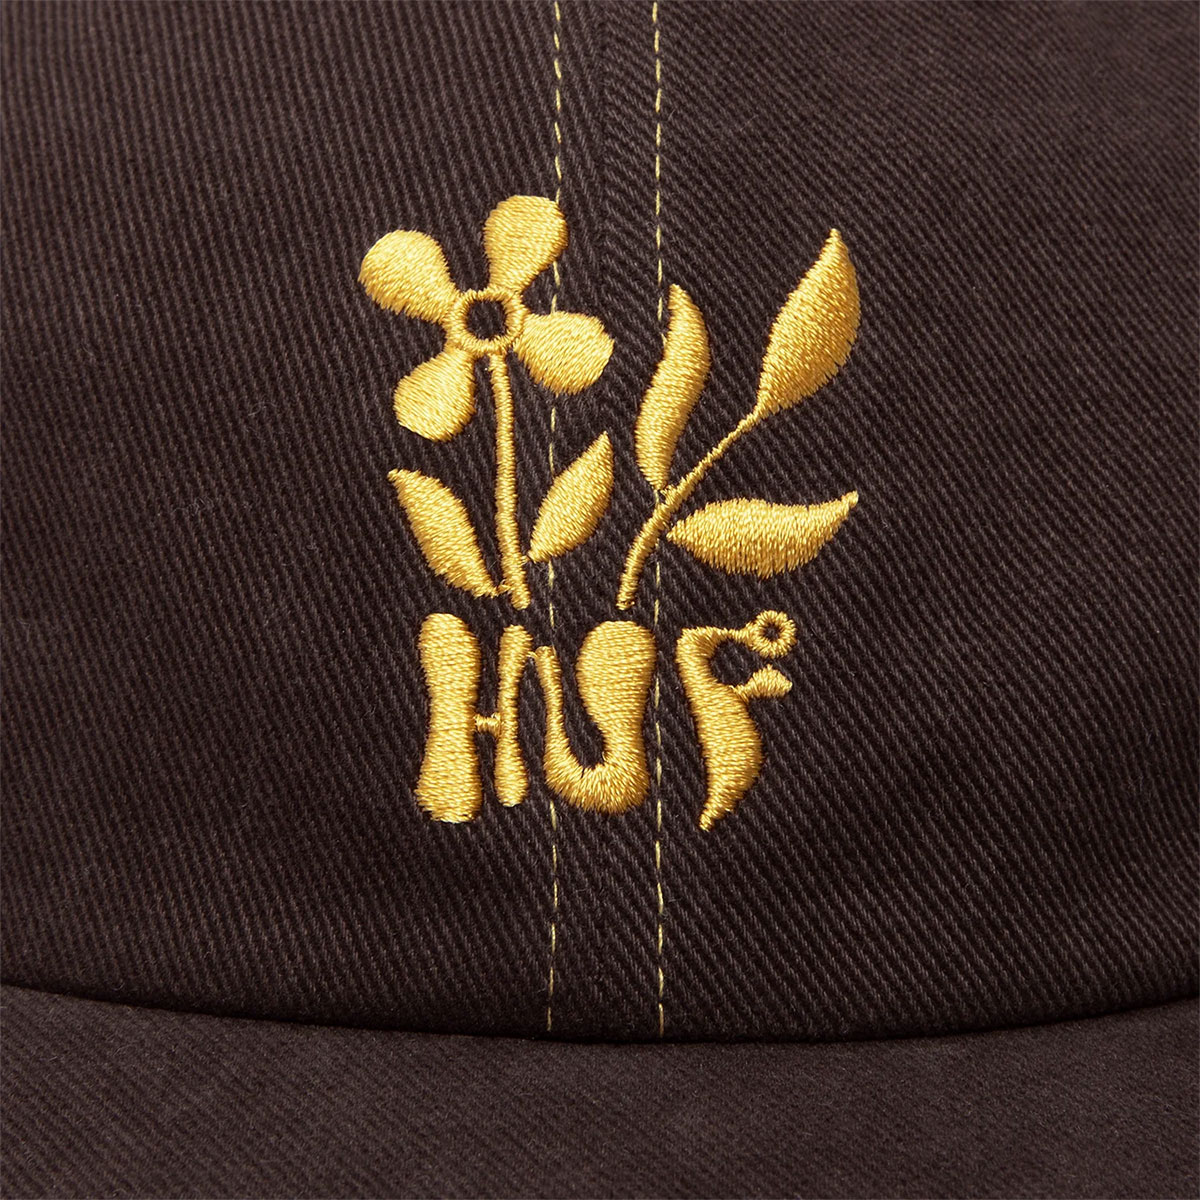 HUF ハフ メンズ キャップ 帽子 6パネル レディース ロゴ 刺繍